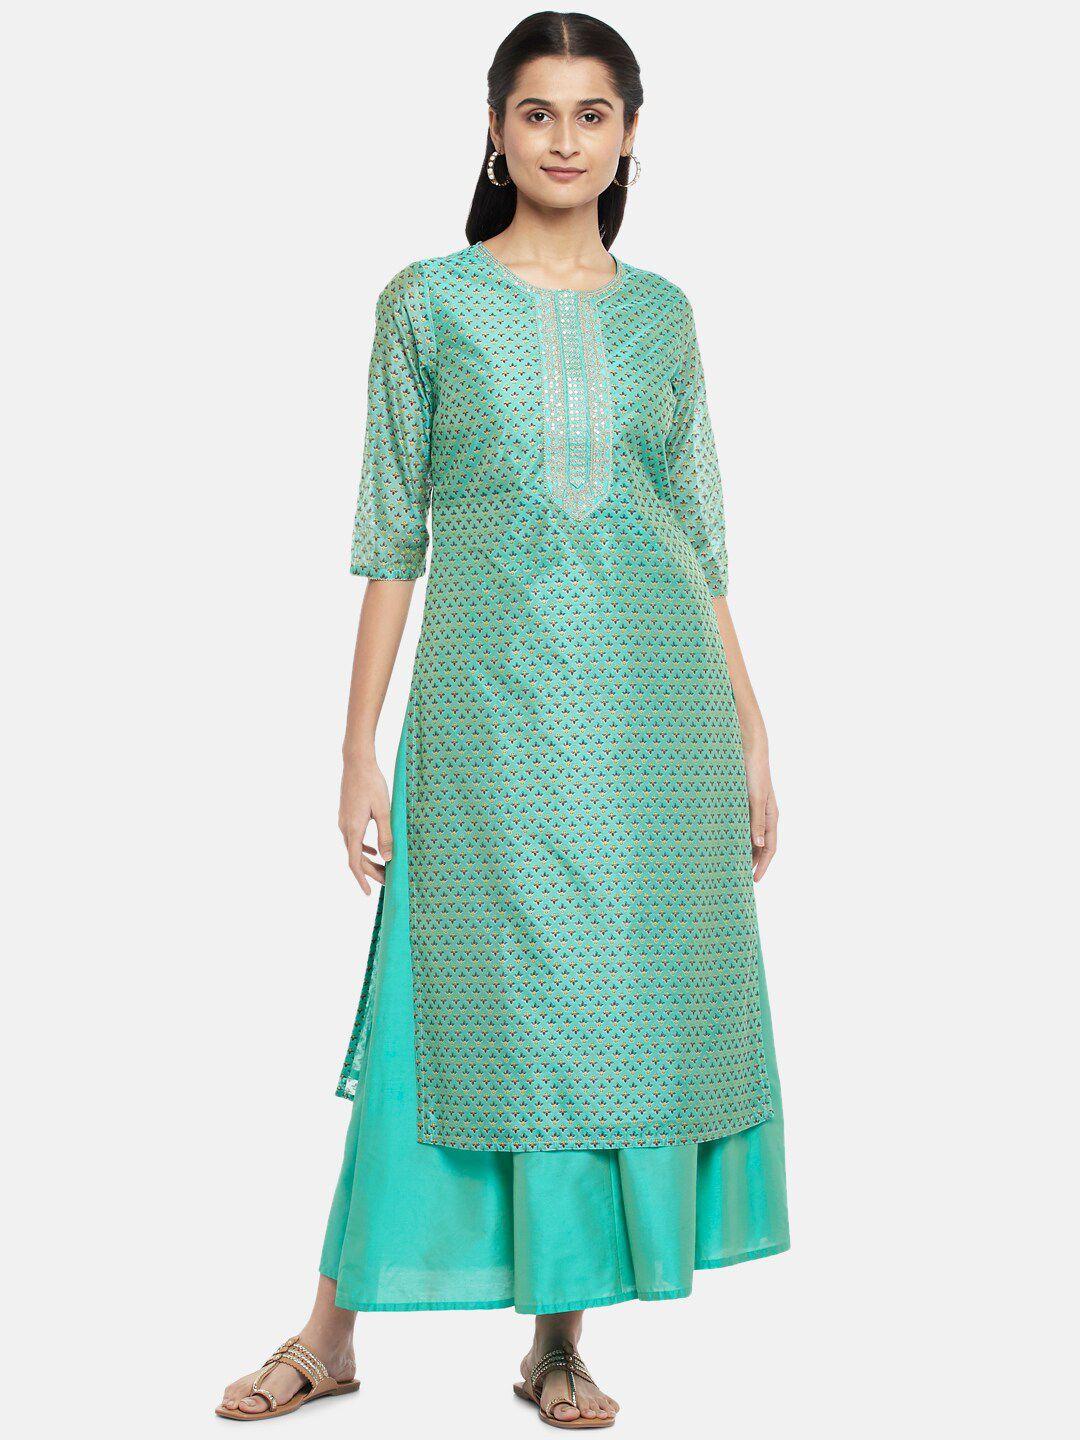 rangmanch-by-pantaloons-women-blue-printed-chanderi-silk-kurti-with-palazzos